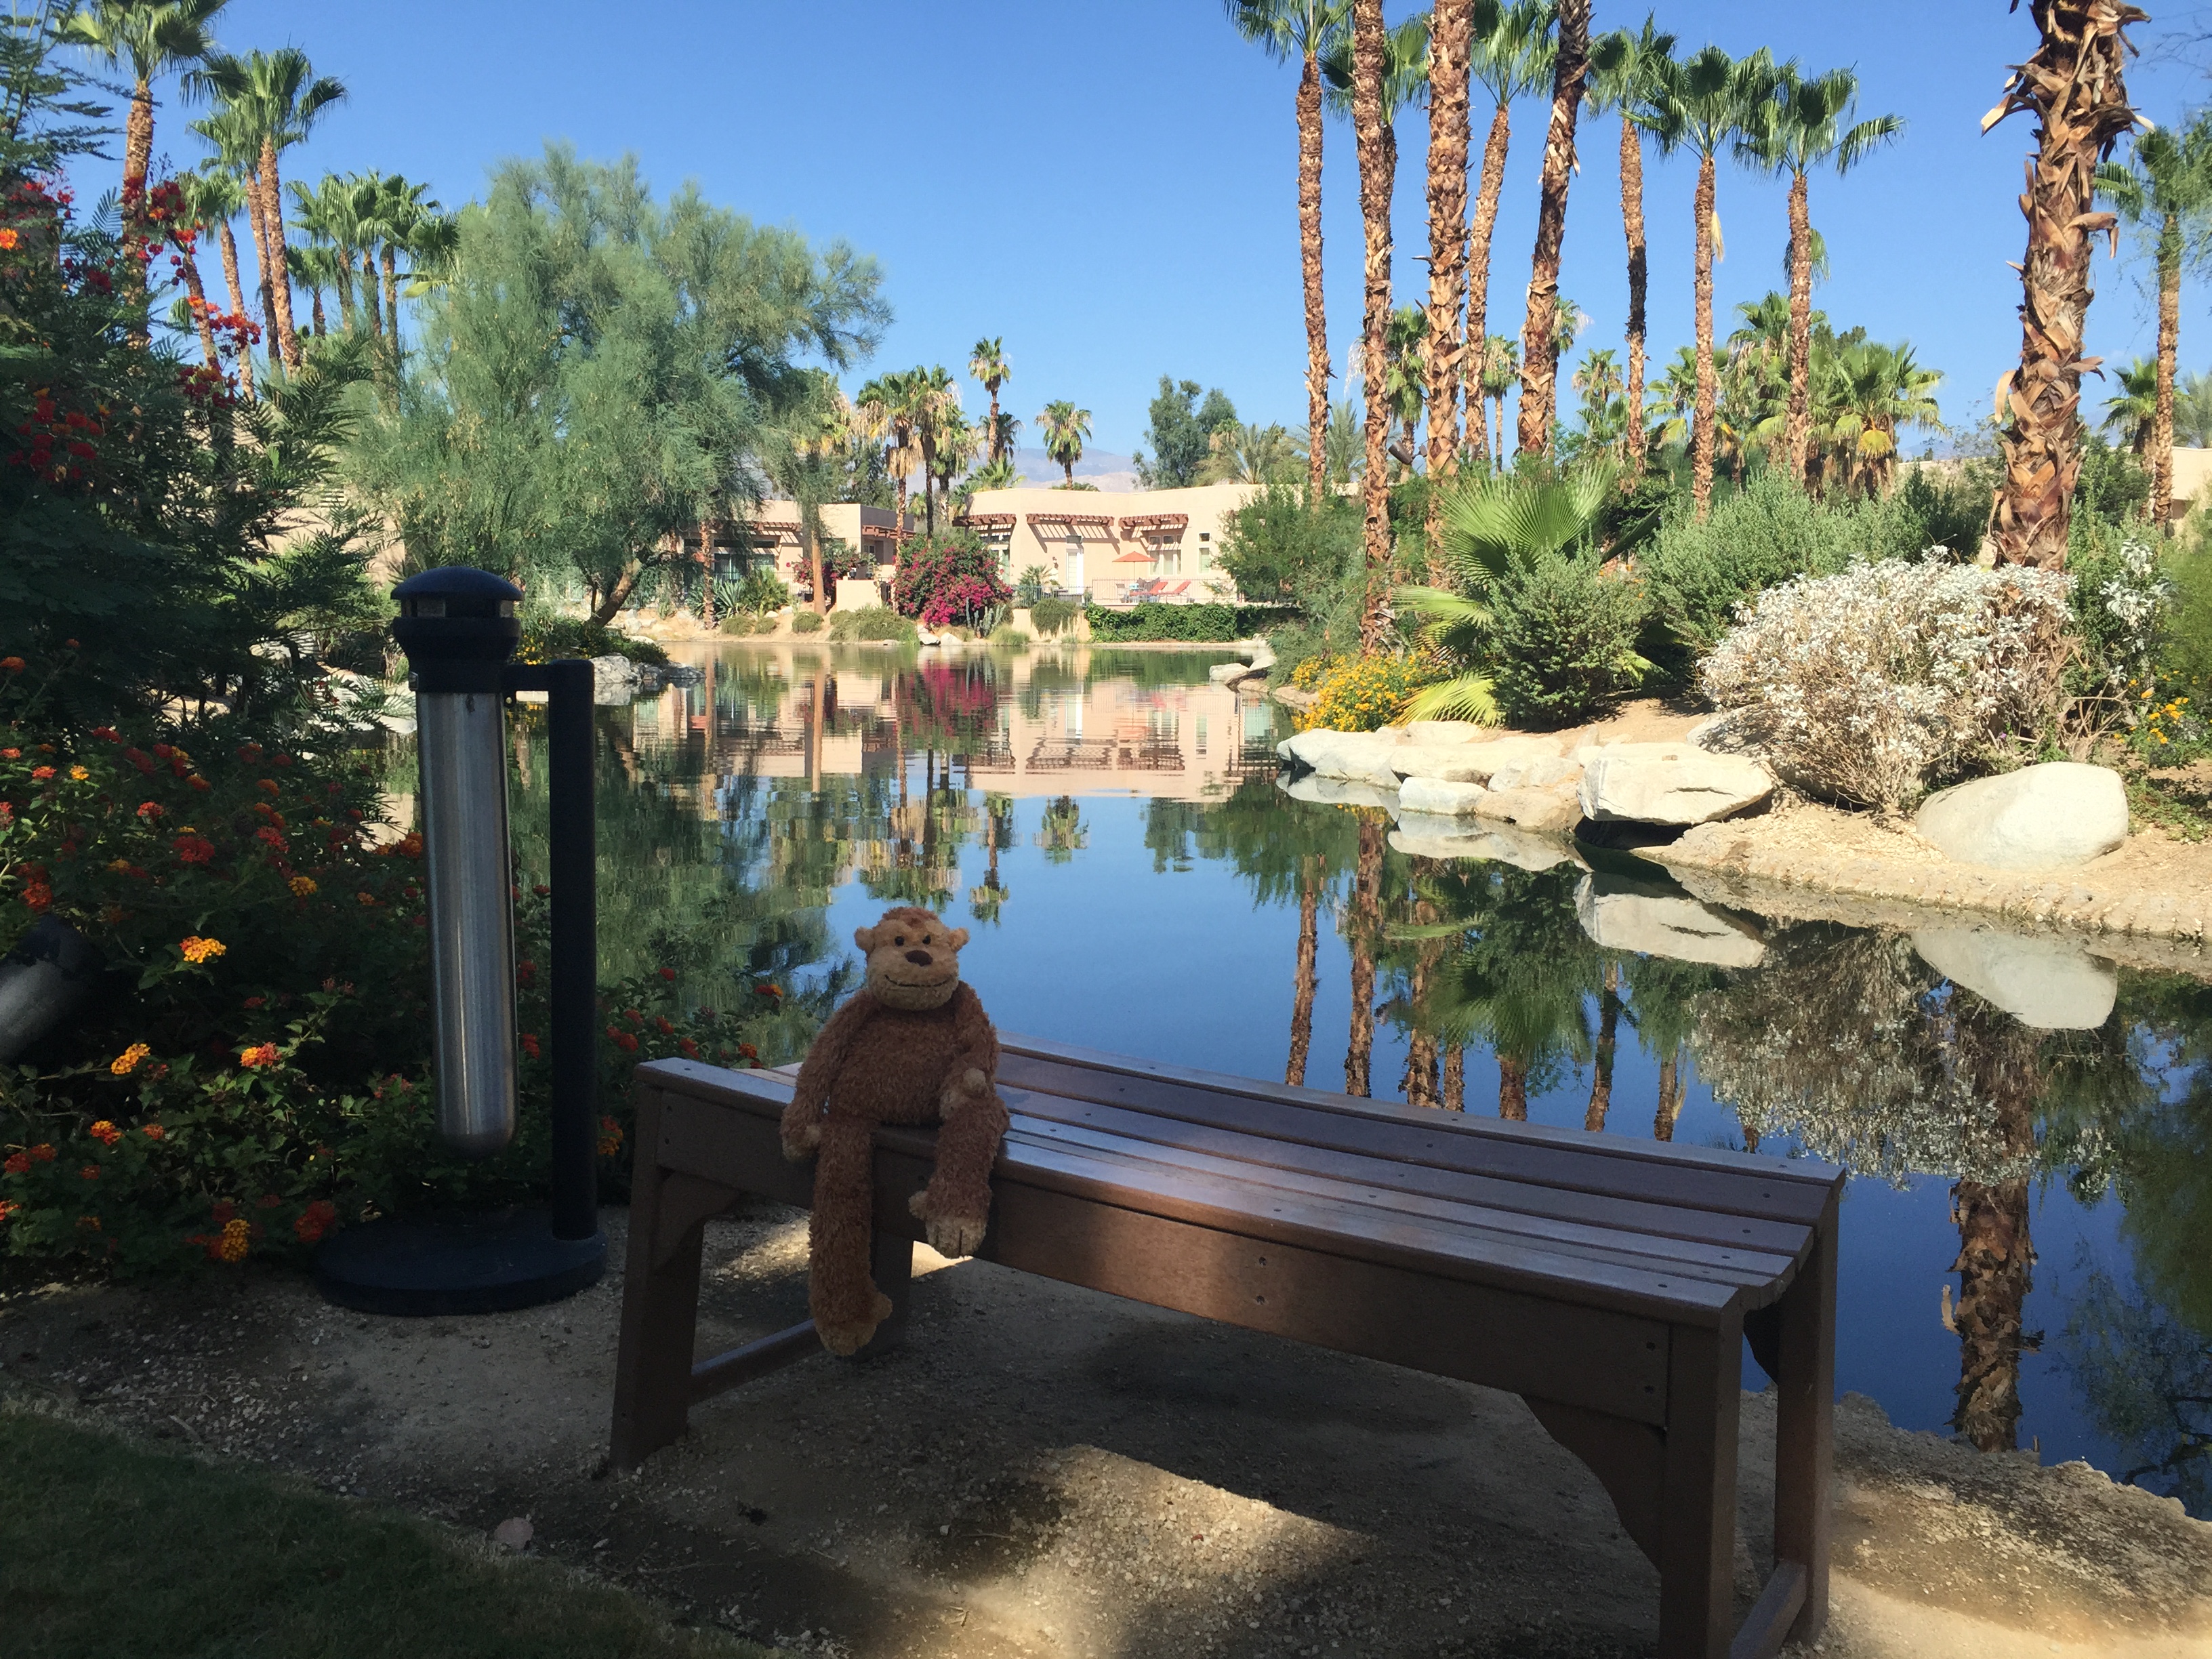 a teddy bear on a bench by a pond